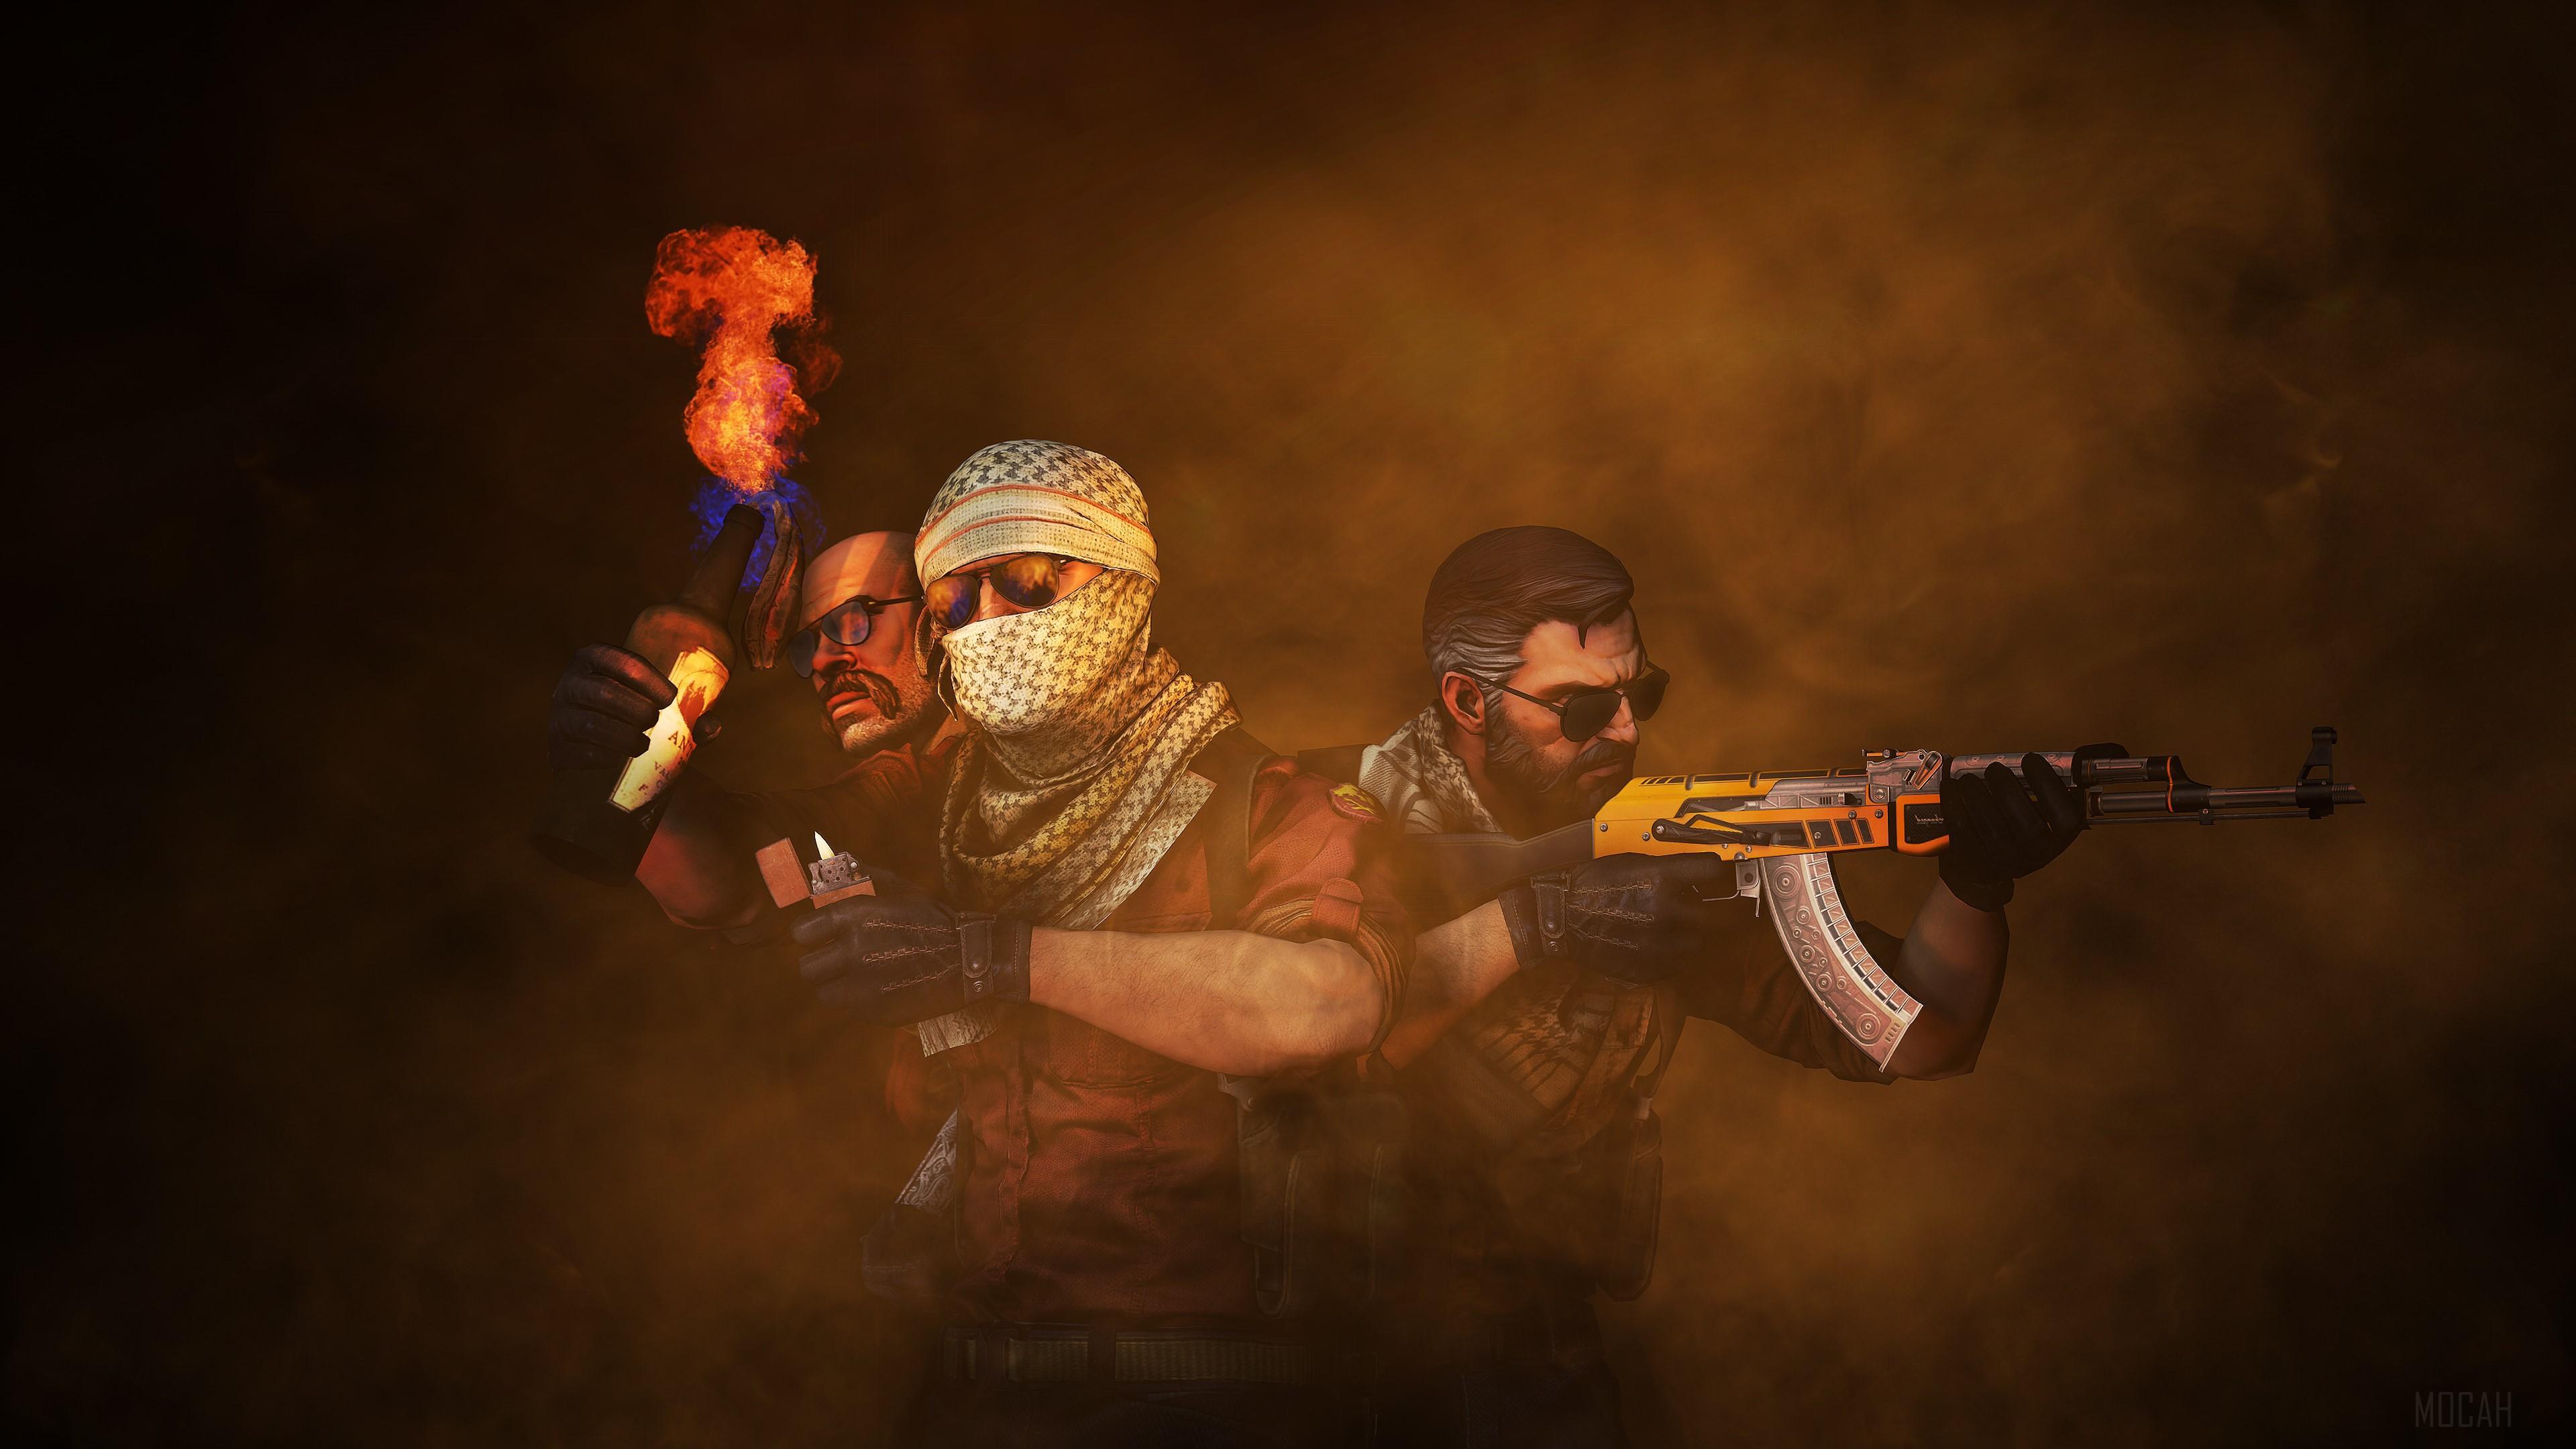 HD wallpaper, Counter Strike Game Art 4K